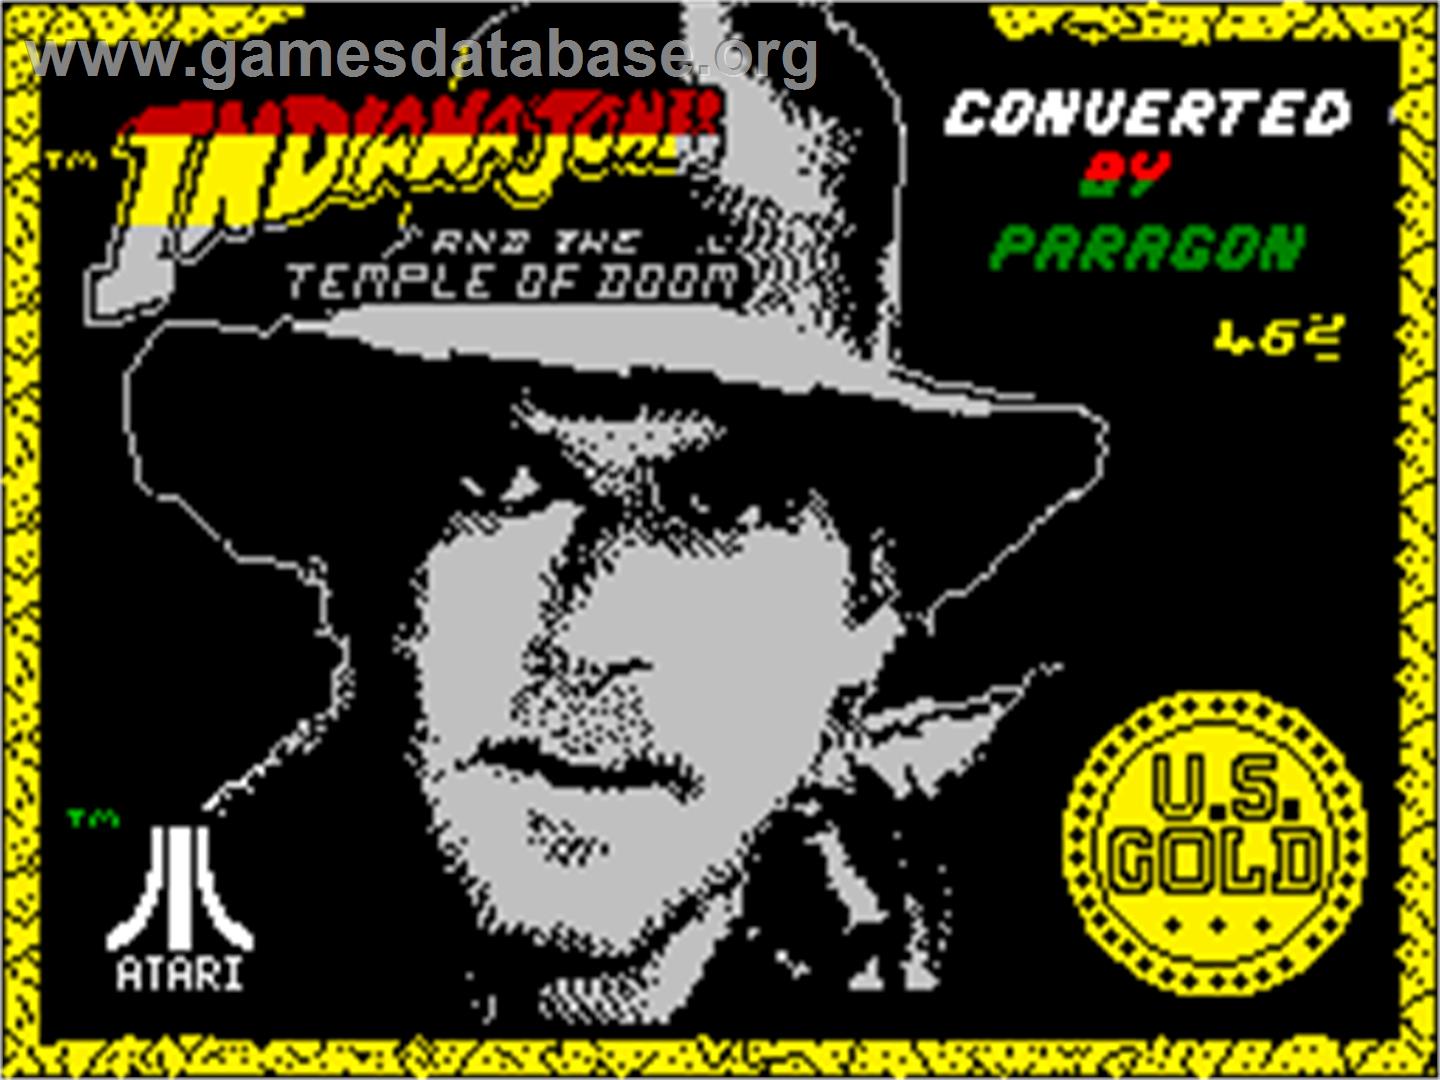 Indiana Jones and the Temple of Doom - Sinclair ZX Spectrum - Artwork - Title Screen